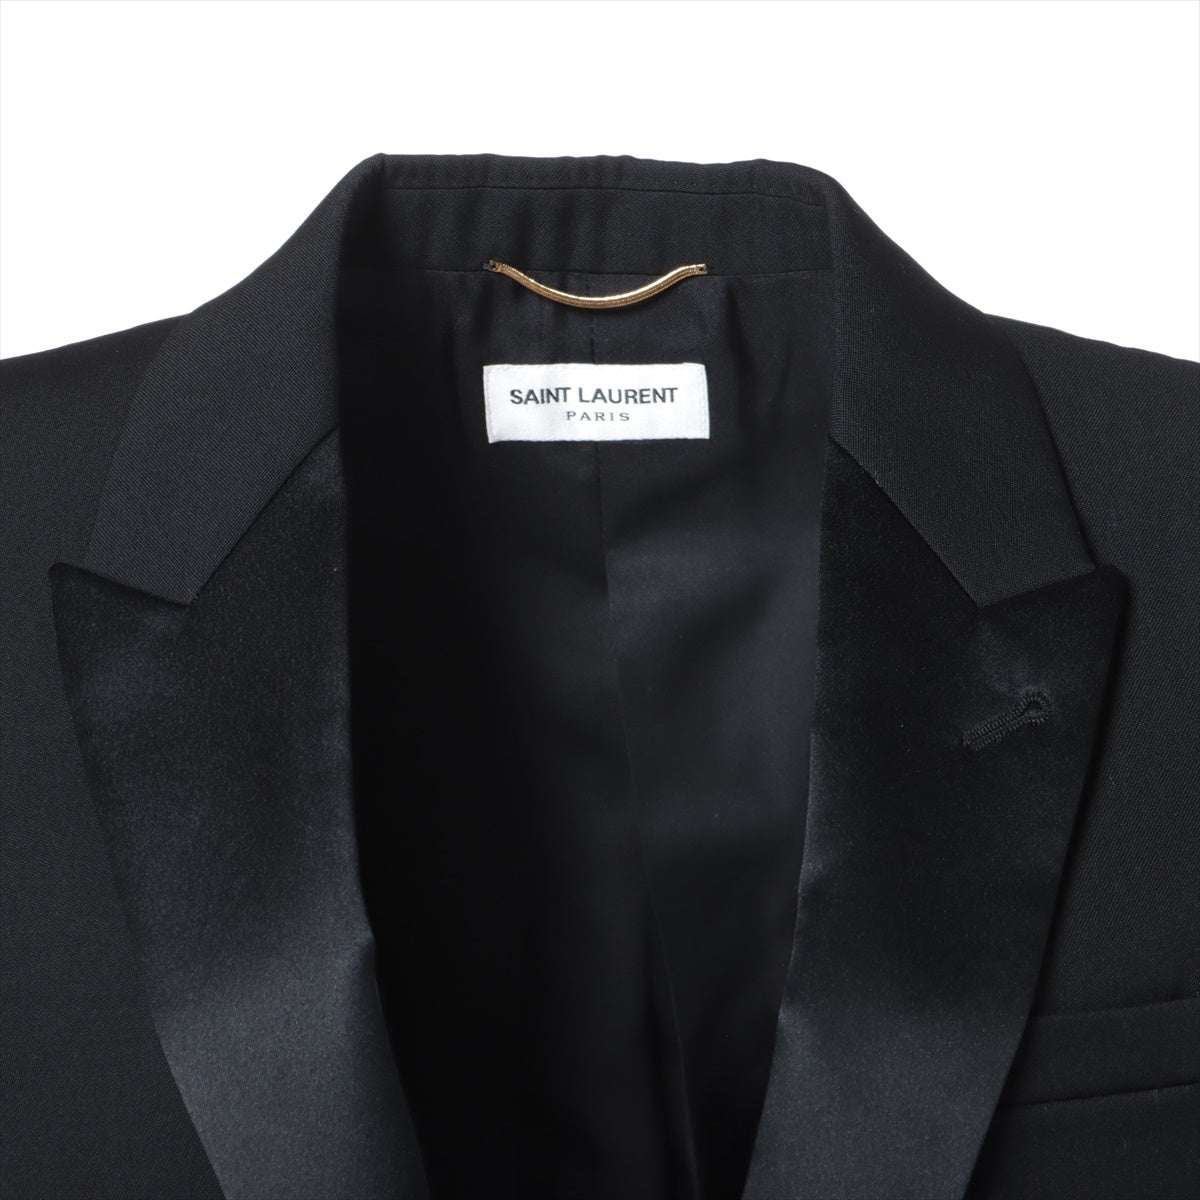 Saint Laurent Paris 22 years Wool & polyester Jacket F34 Ladies' Black  smoking 745304